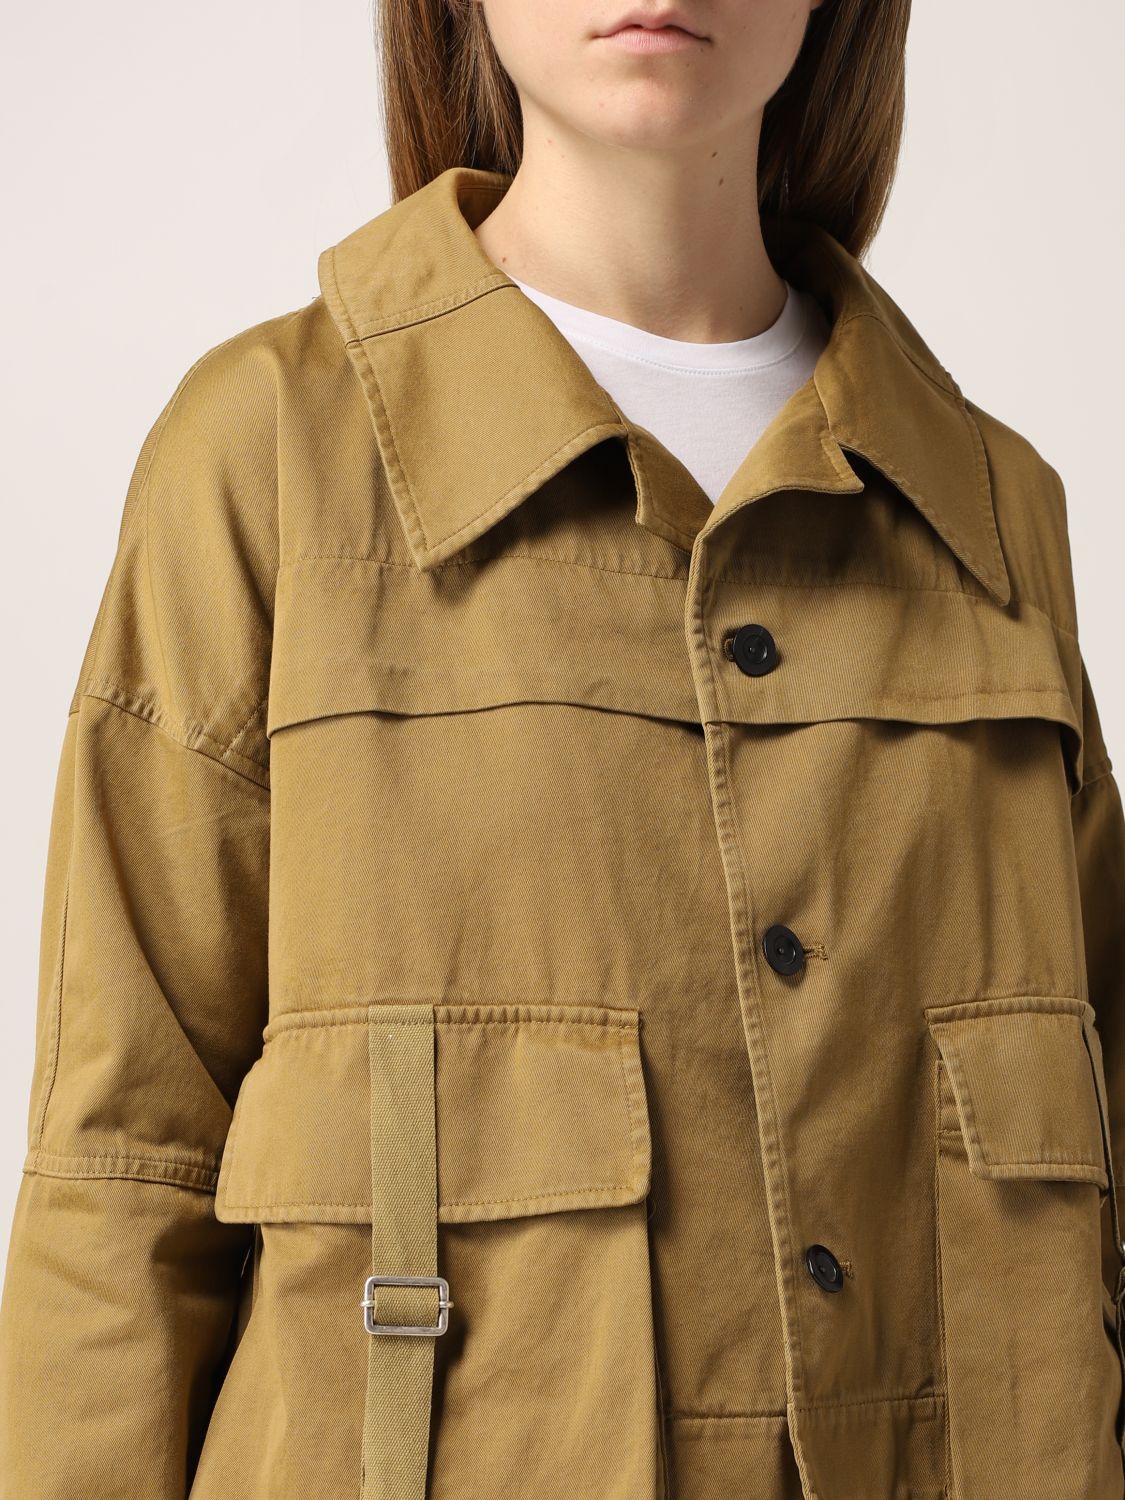 Markeret kort Masaccio Dondup Outlet: cropped jacket in cotton gabardine - Beige | Dondup jacket  DJ467GF0440DPTD online on GIGLIO.COM